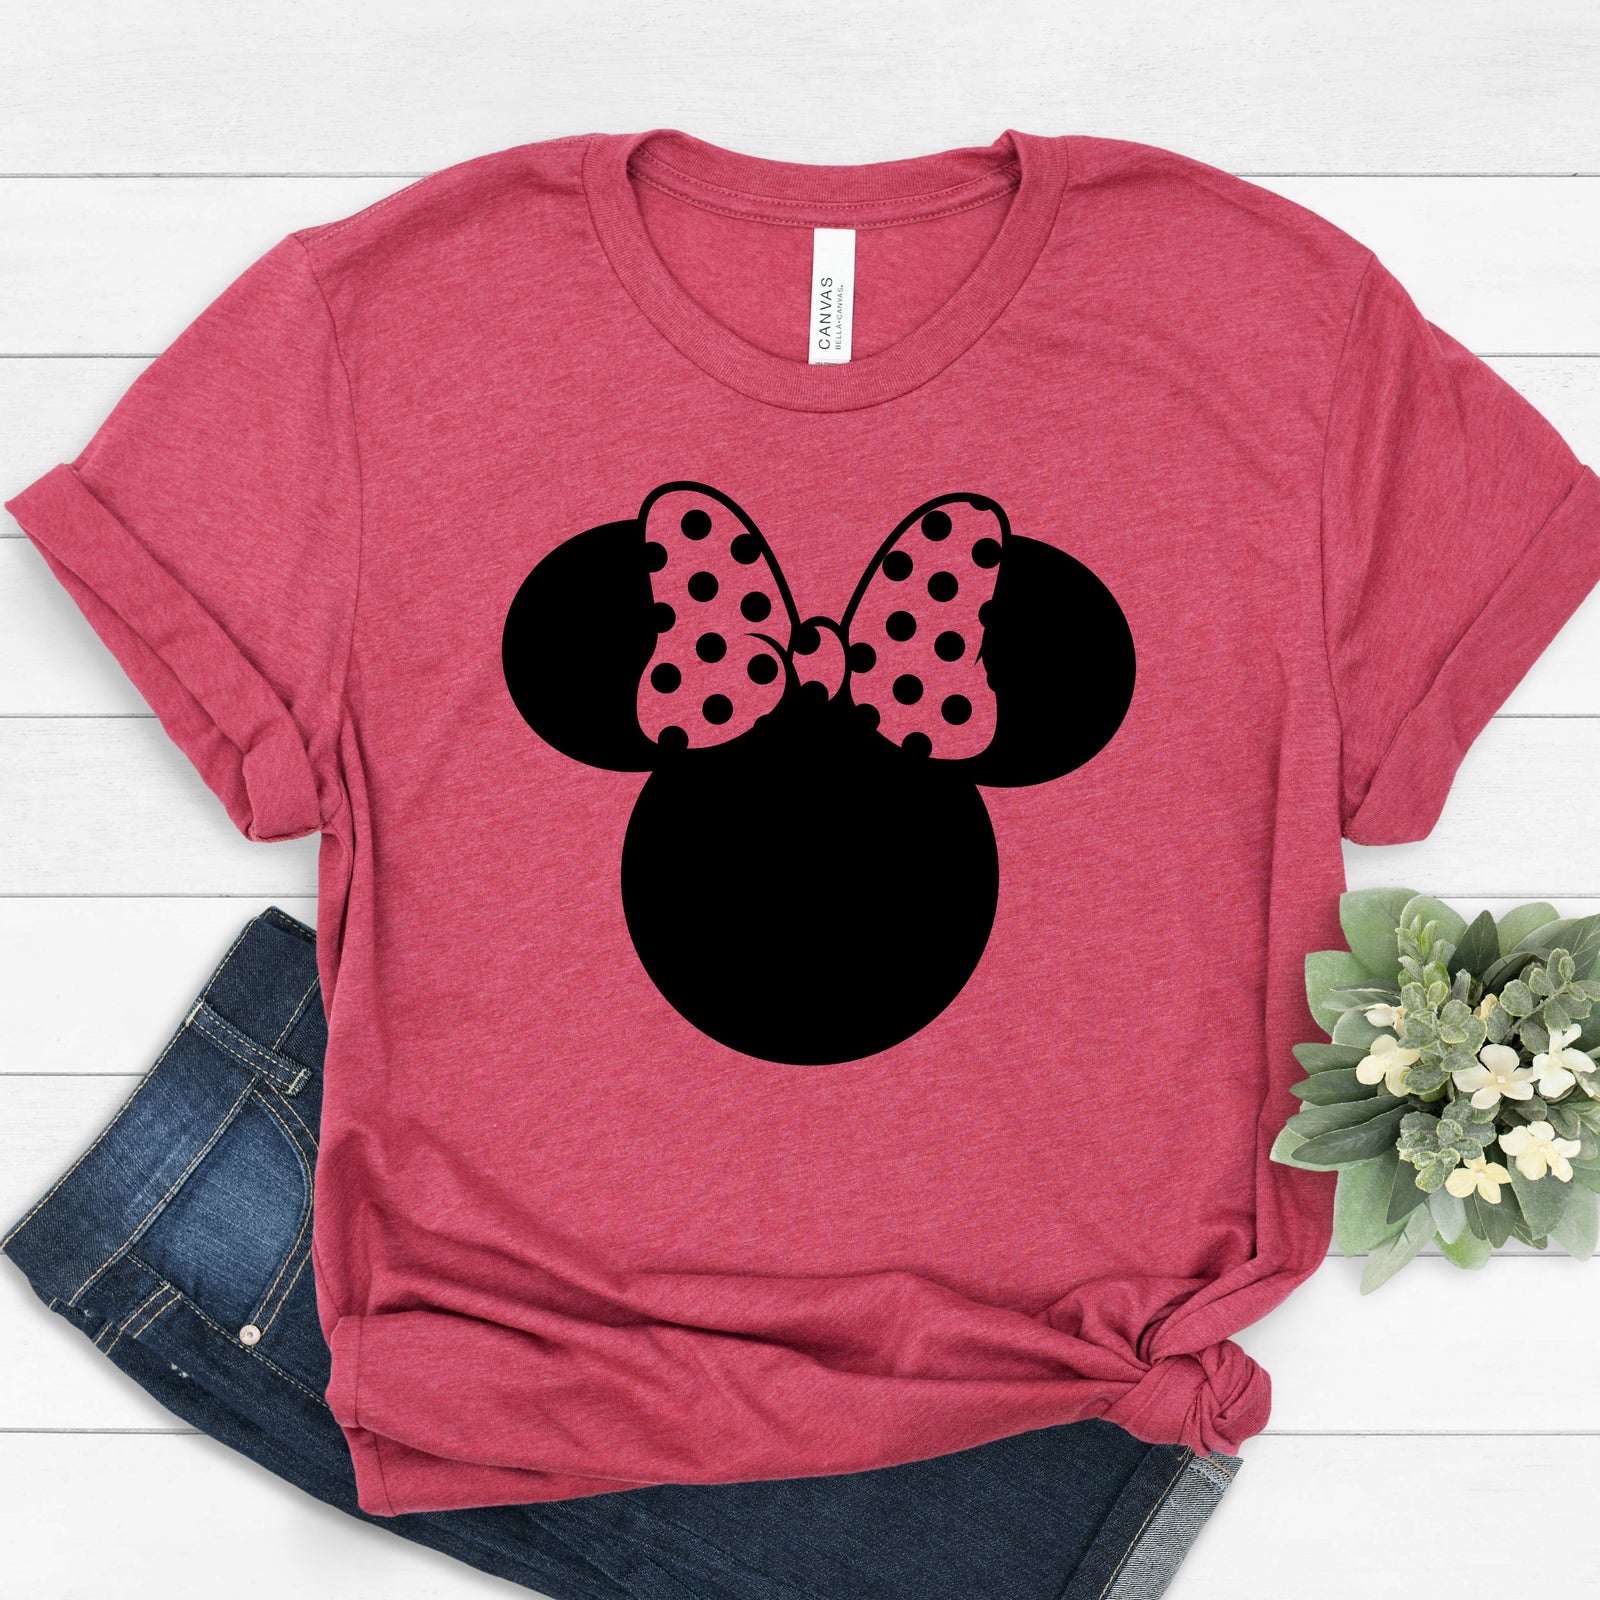 Minnie Polka Dot Bow T Shirt- Disney Trip Matching Shirts - Minnie Mouse T Shirt - Cute Minnie Shirt